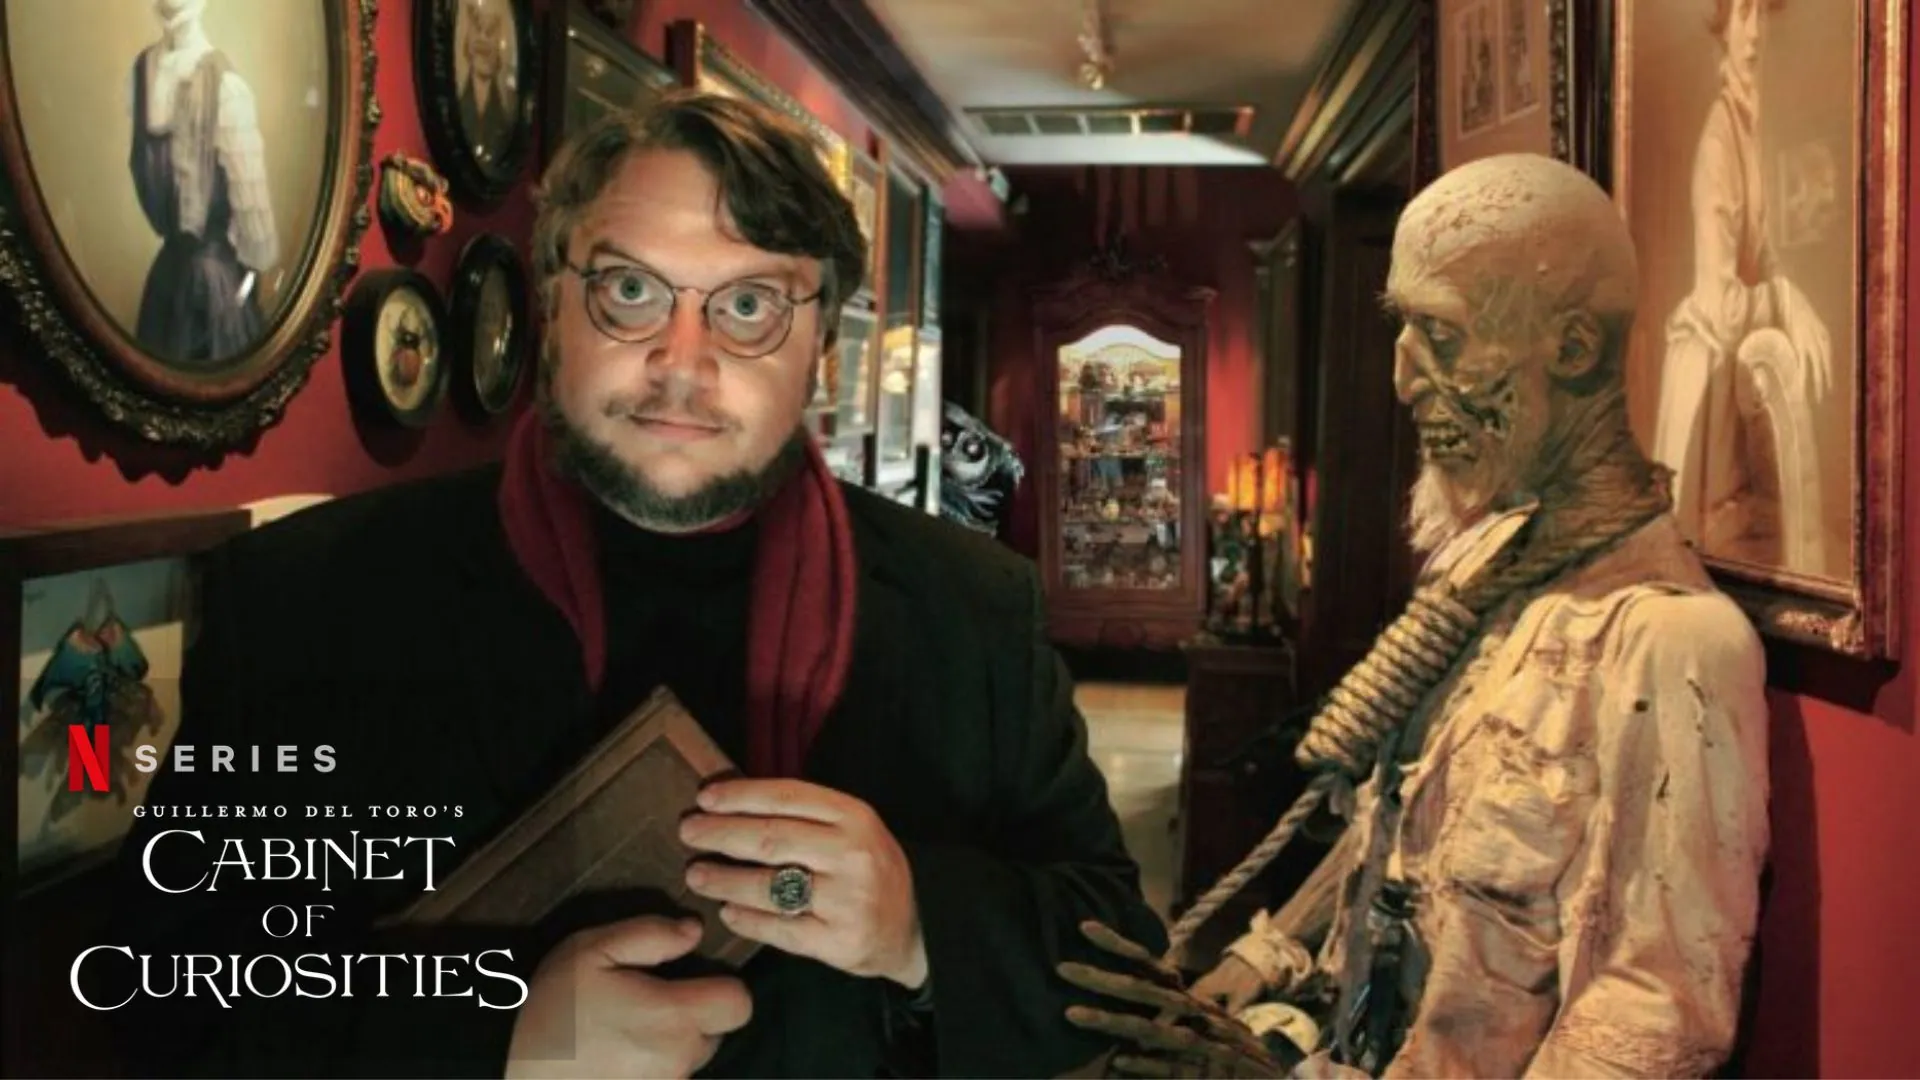 Guillermo del Toro's Cabinet of Curiosities Parents Guide